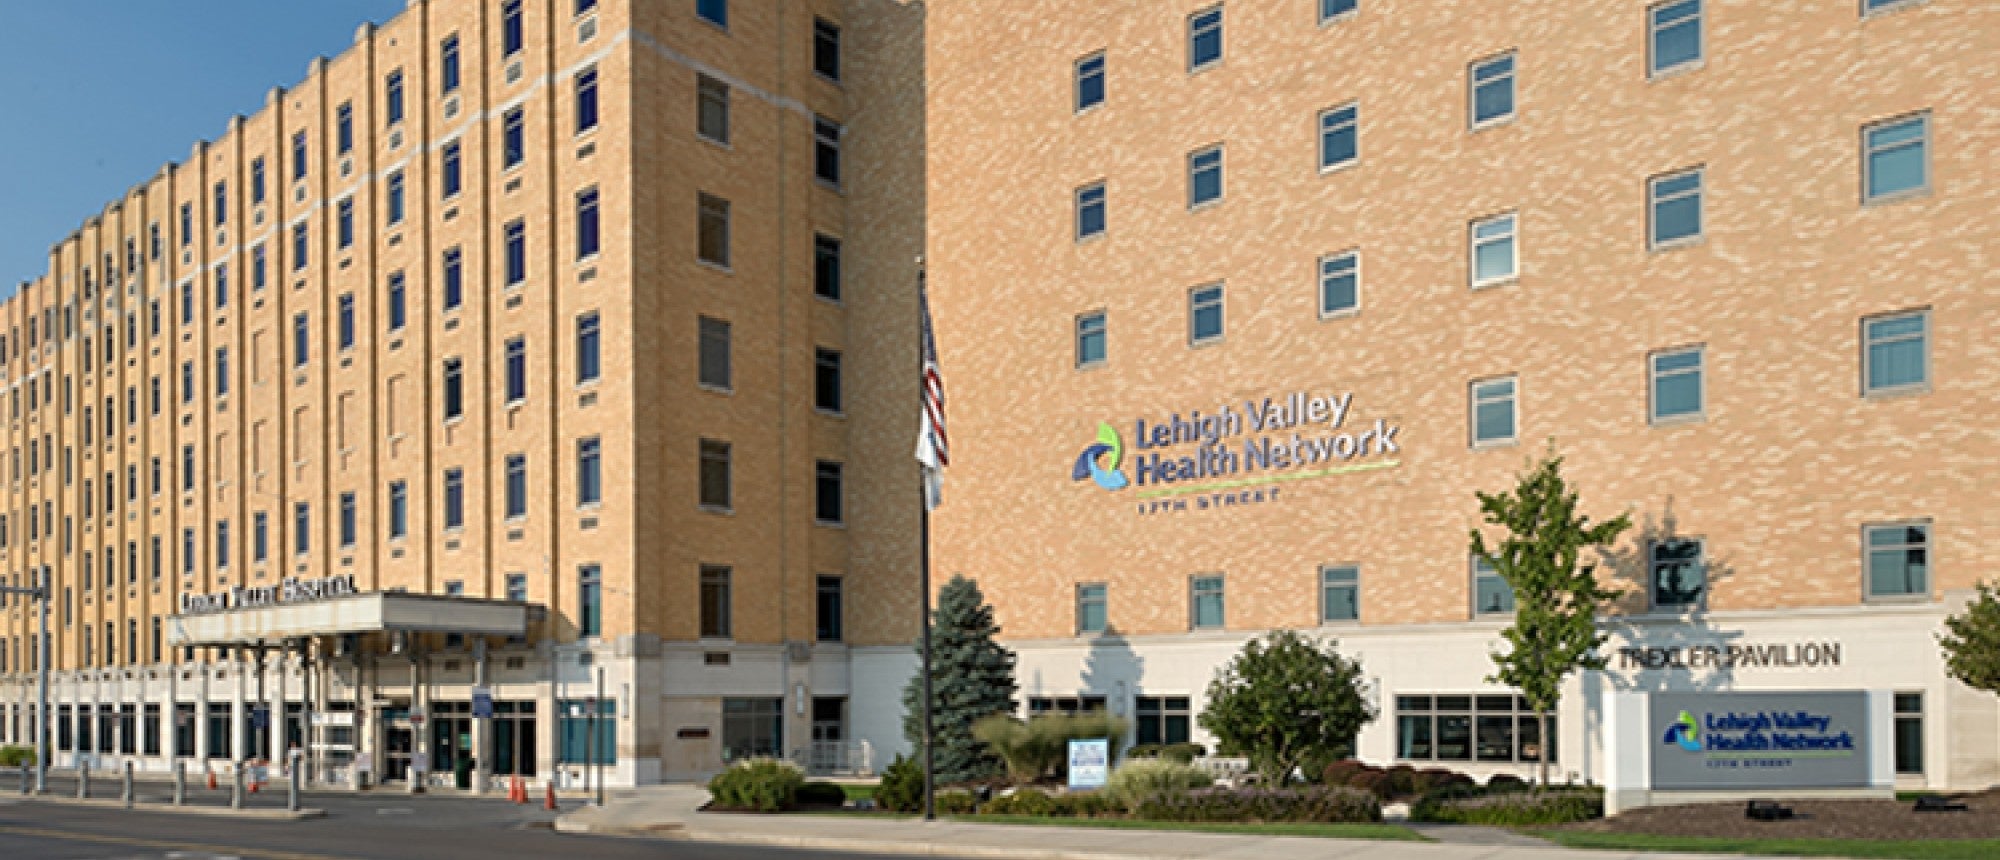 Health Spectrum Pharmacy Services at Lehigh Valley Hospital-17th Street